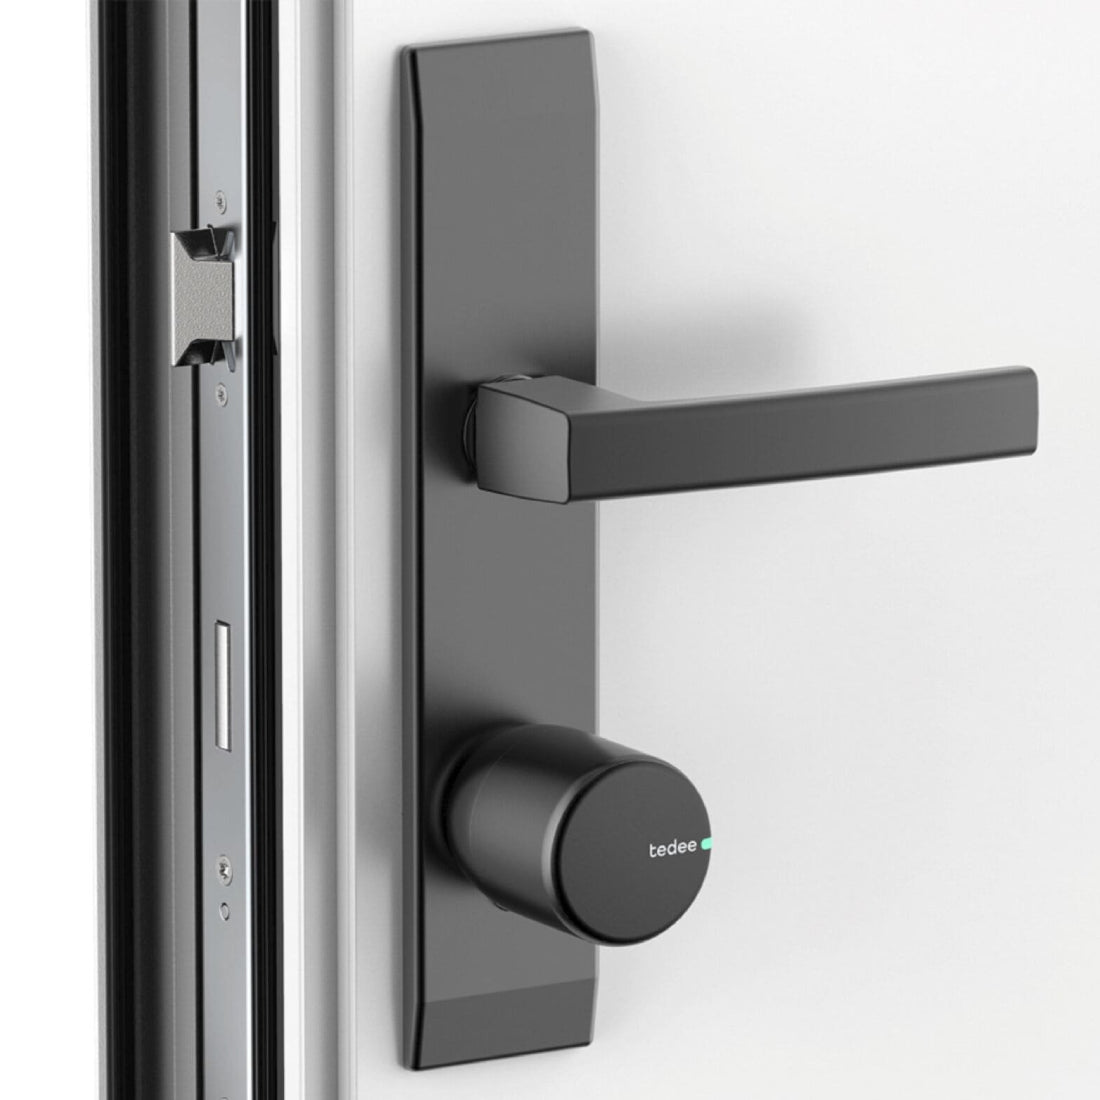 Tedee Smart Door Lock Kit - Graphite - أكسسوارات ذكية - Store 974 | ستور ٩٧٤